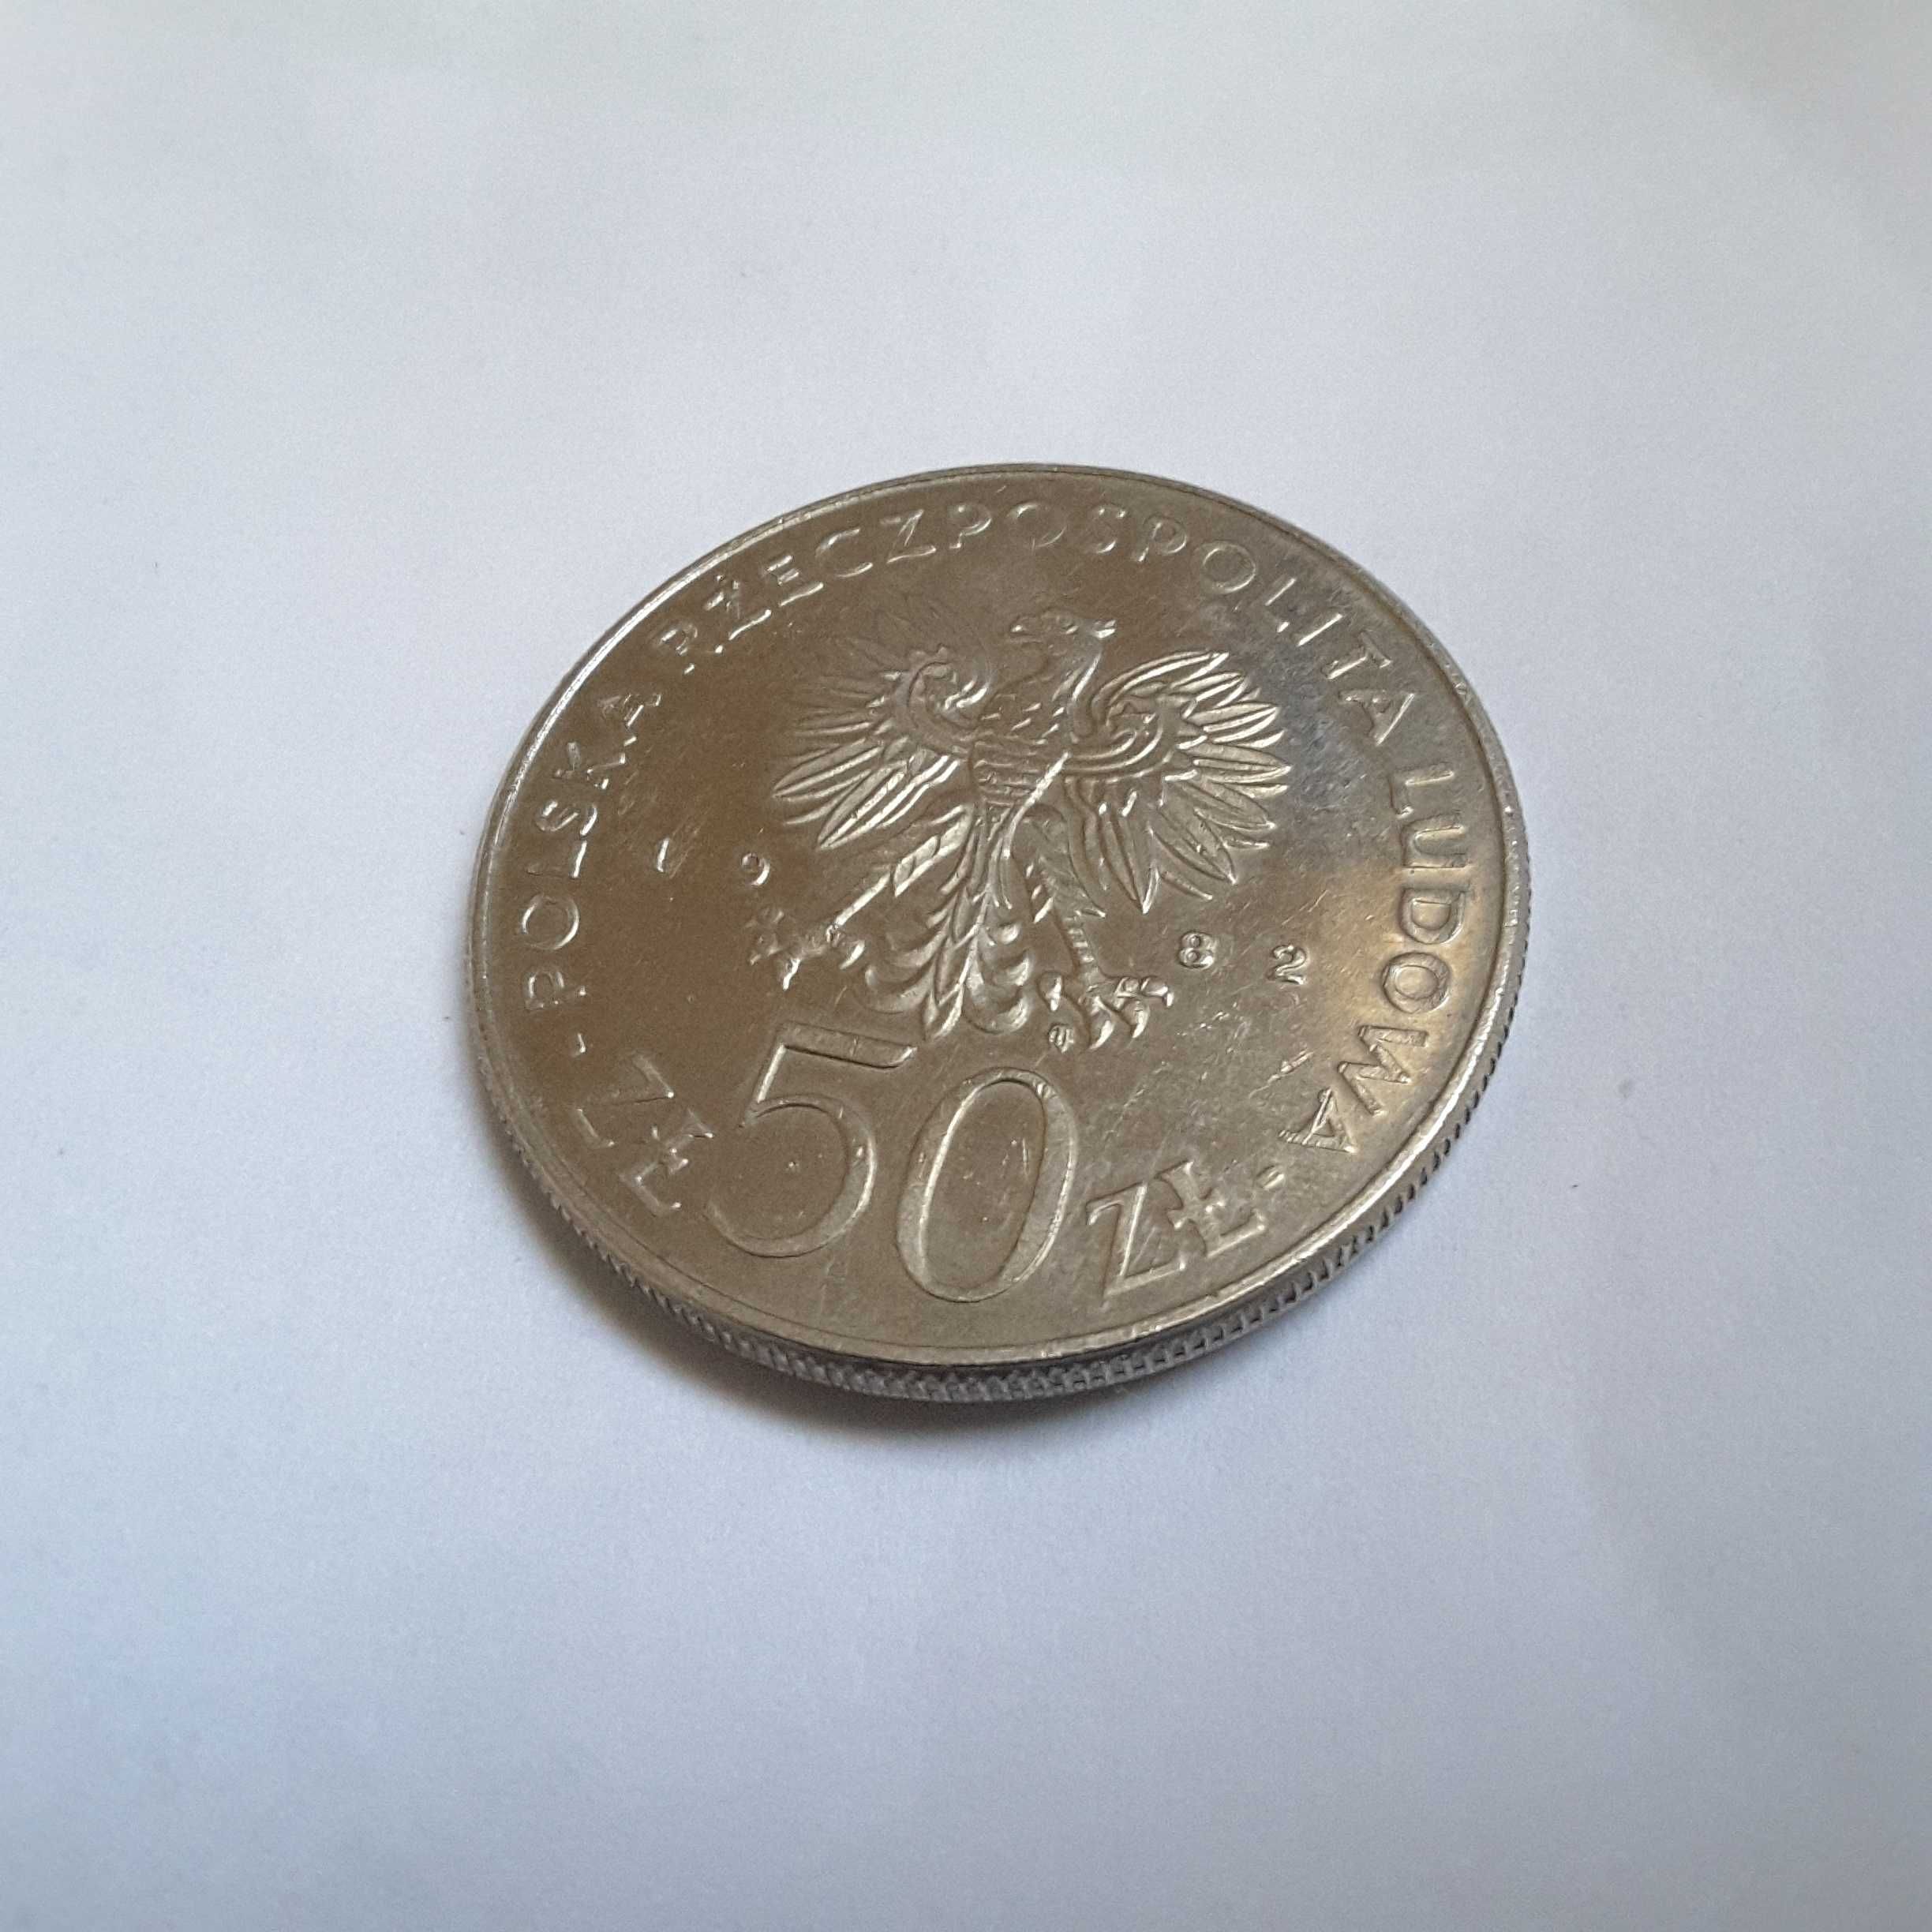 Moneta 50 zl Boleslaw3 Krzywousty 1982.